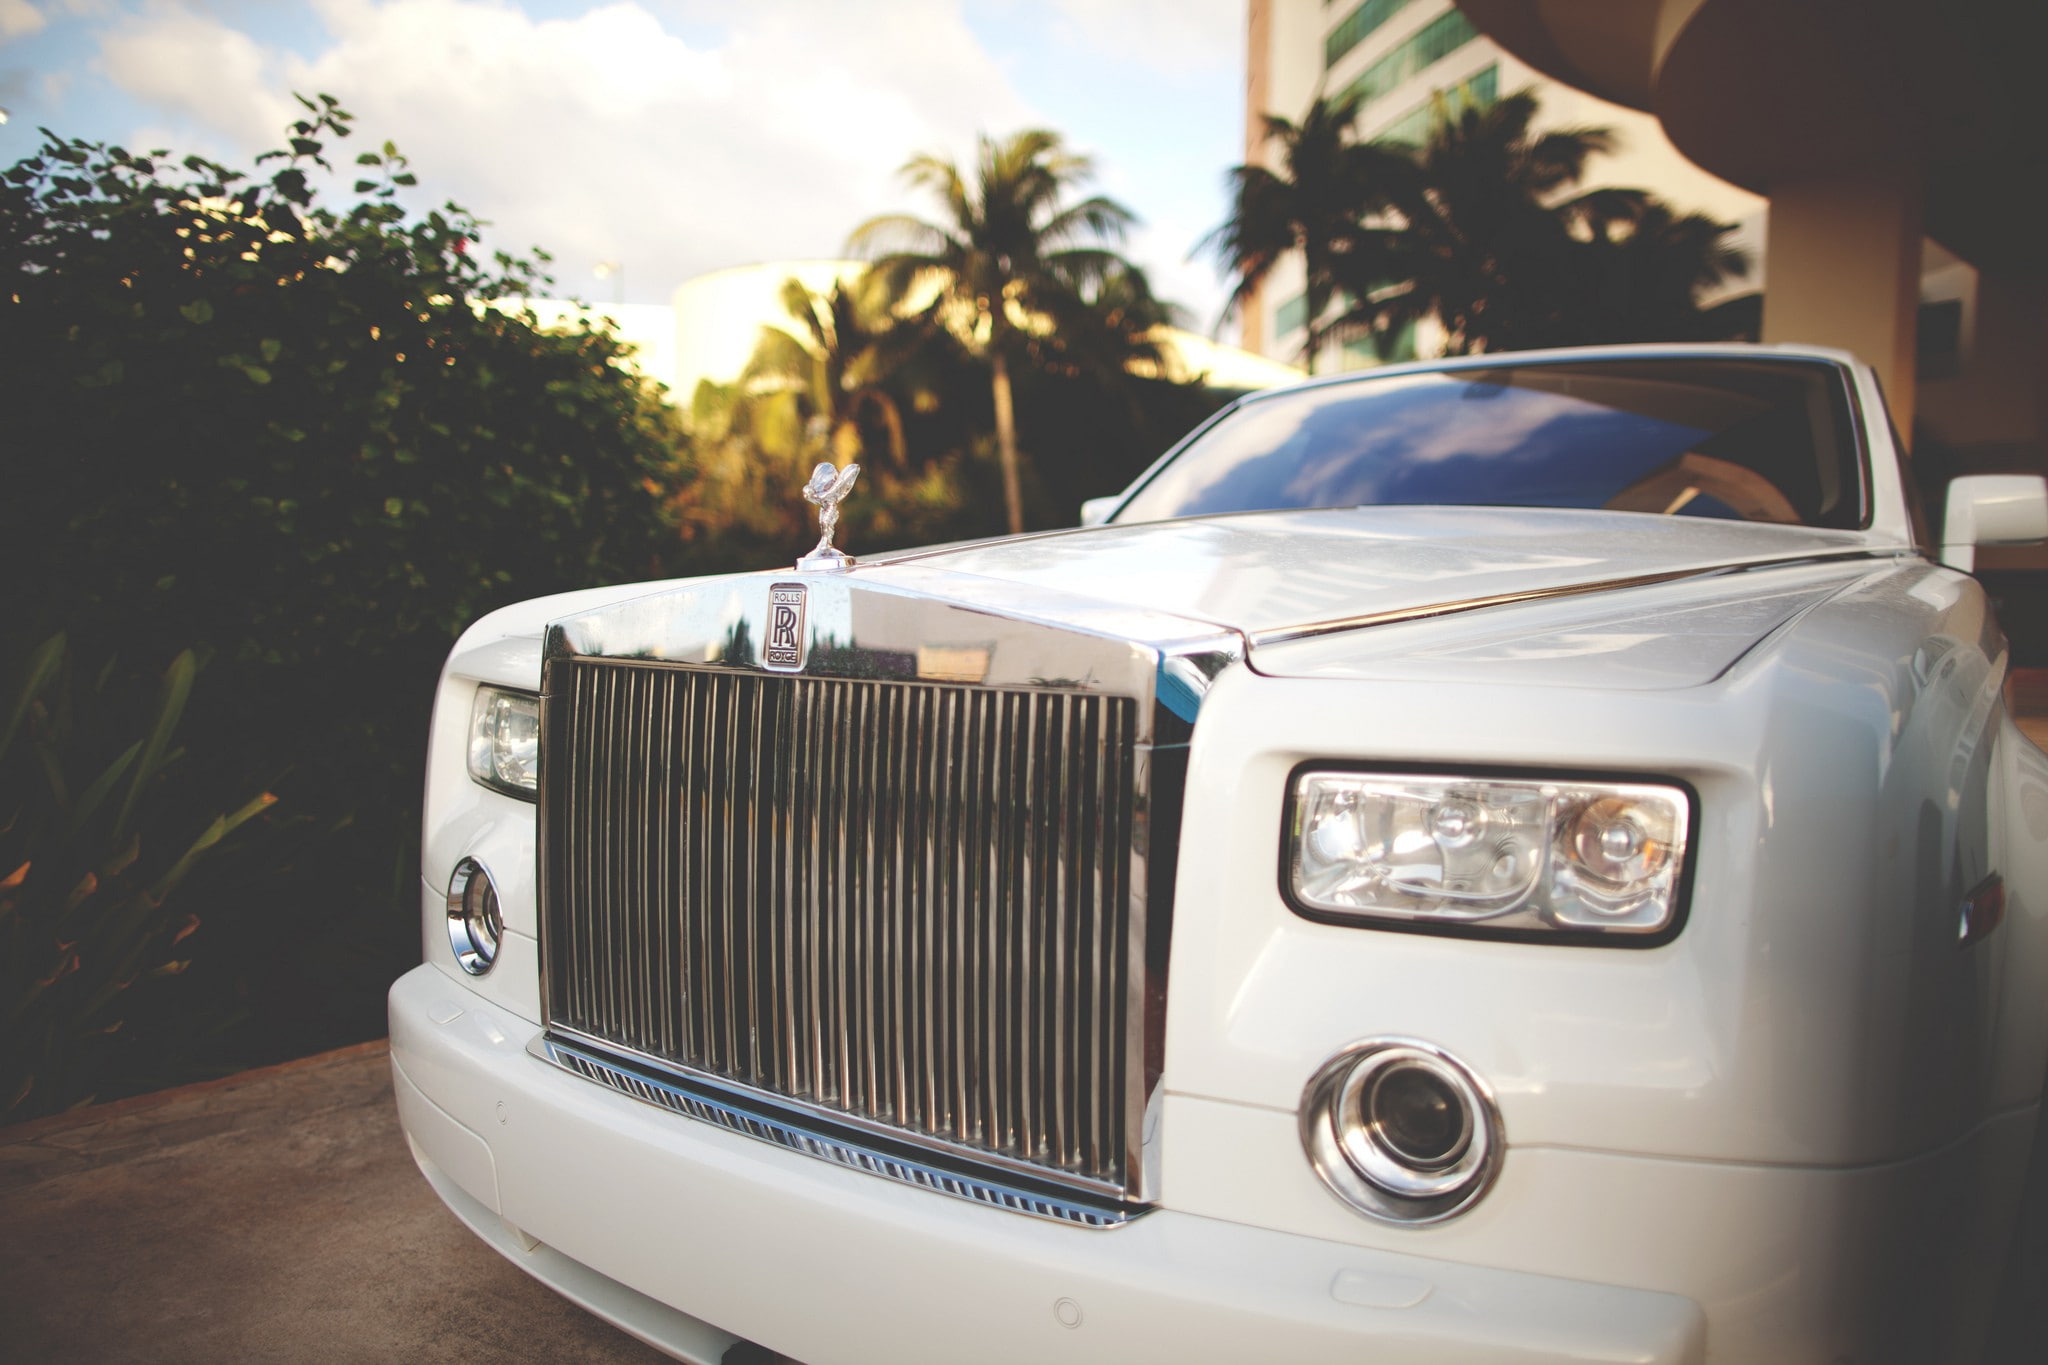 Rolls royce Phantom, white car, luxury, exotic, palm, front